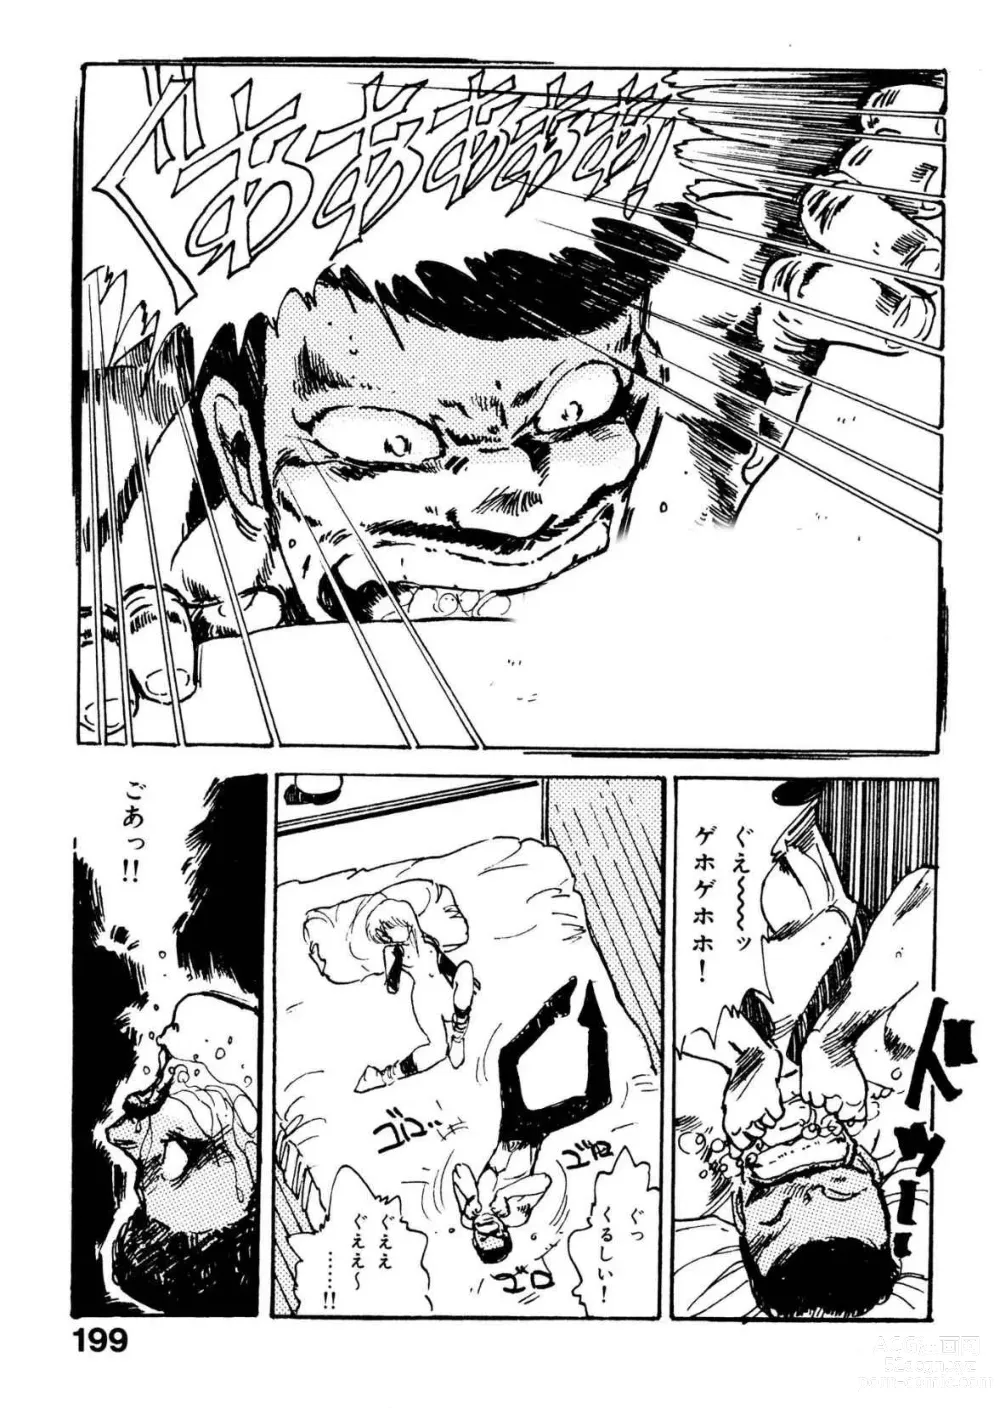 Page 199 of manga Bijo Hime Jigoku